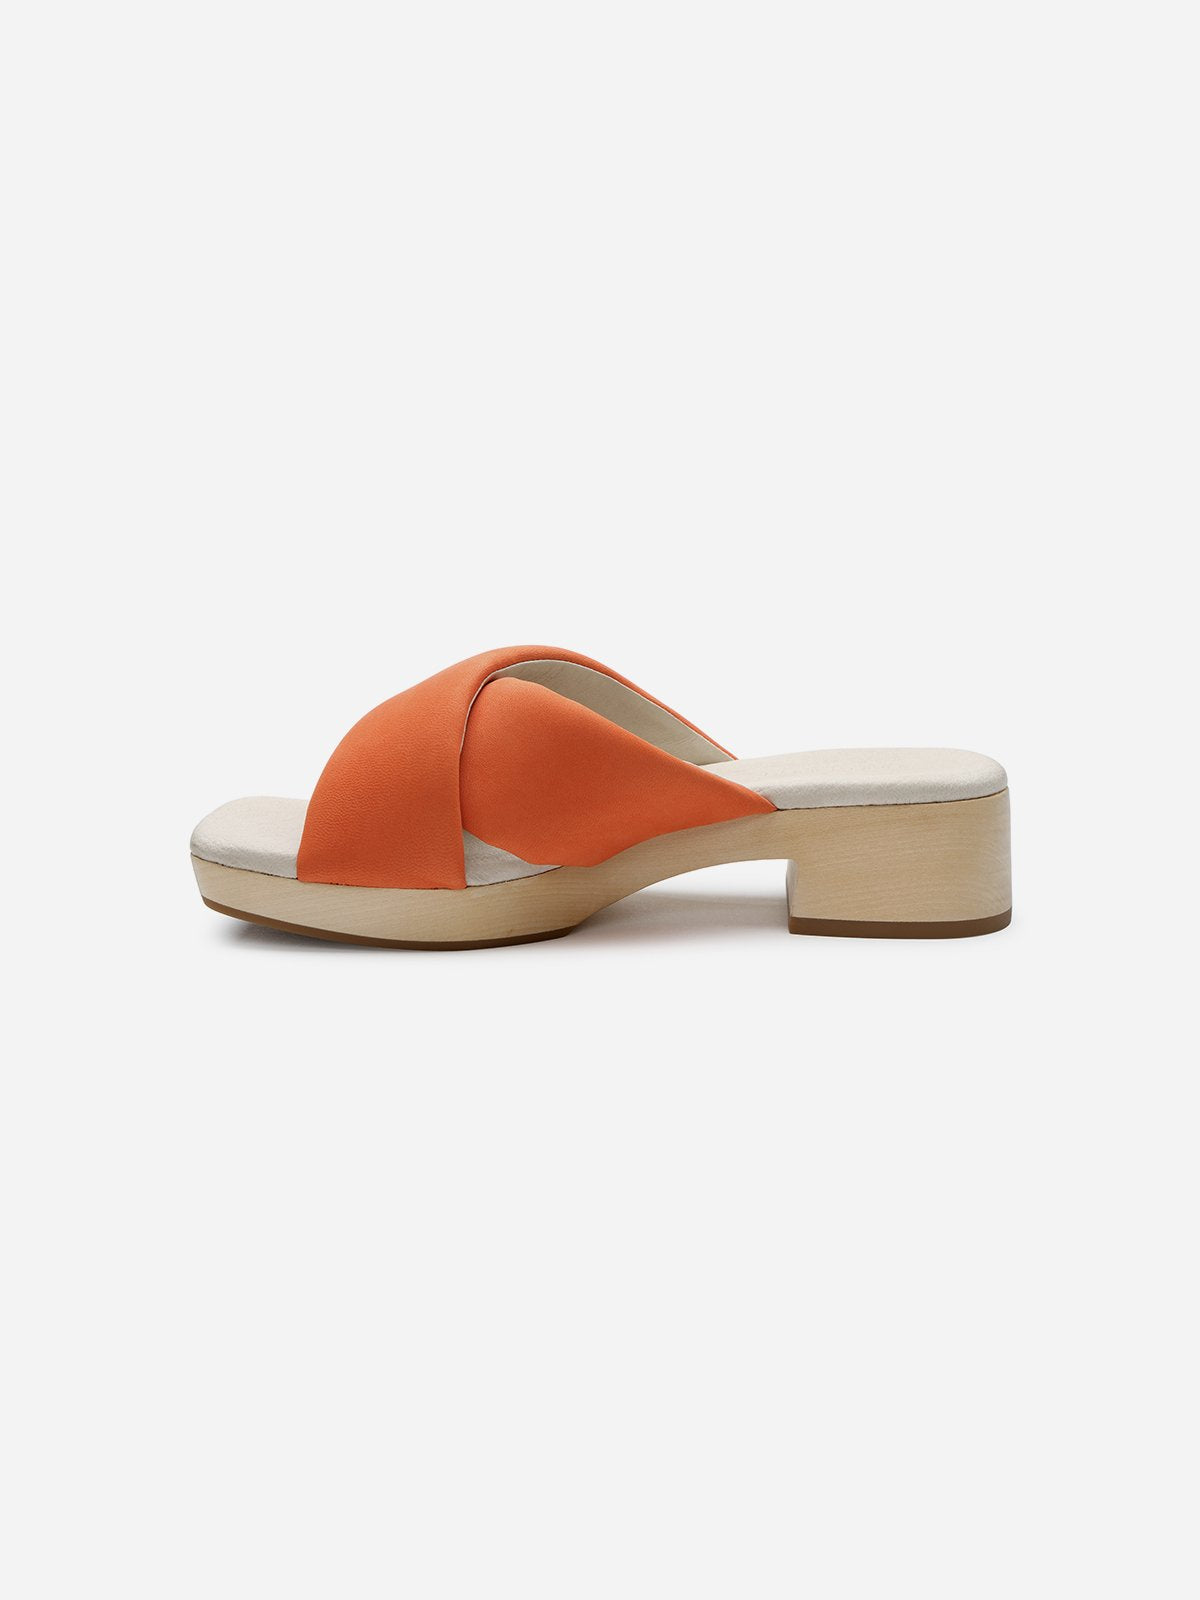 Tangerine Square Toe Wedge Sandal